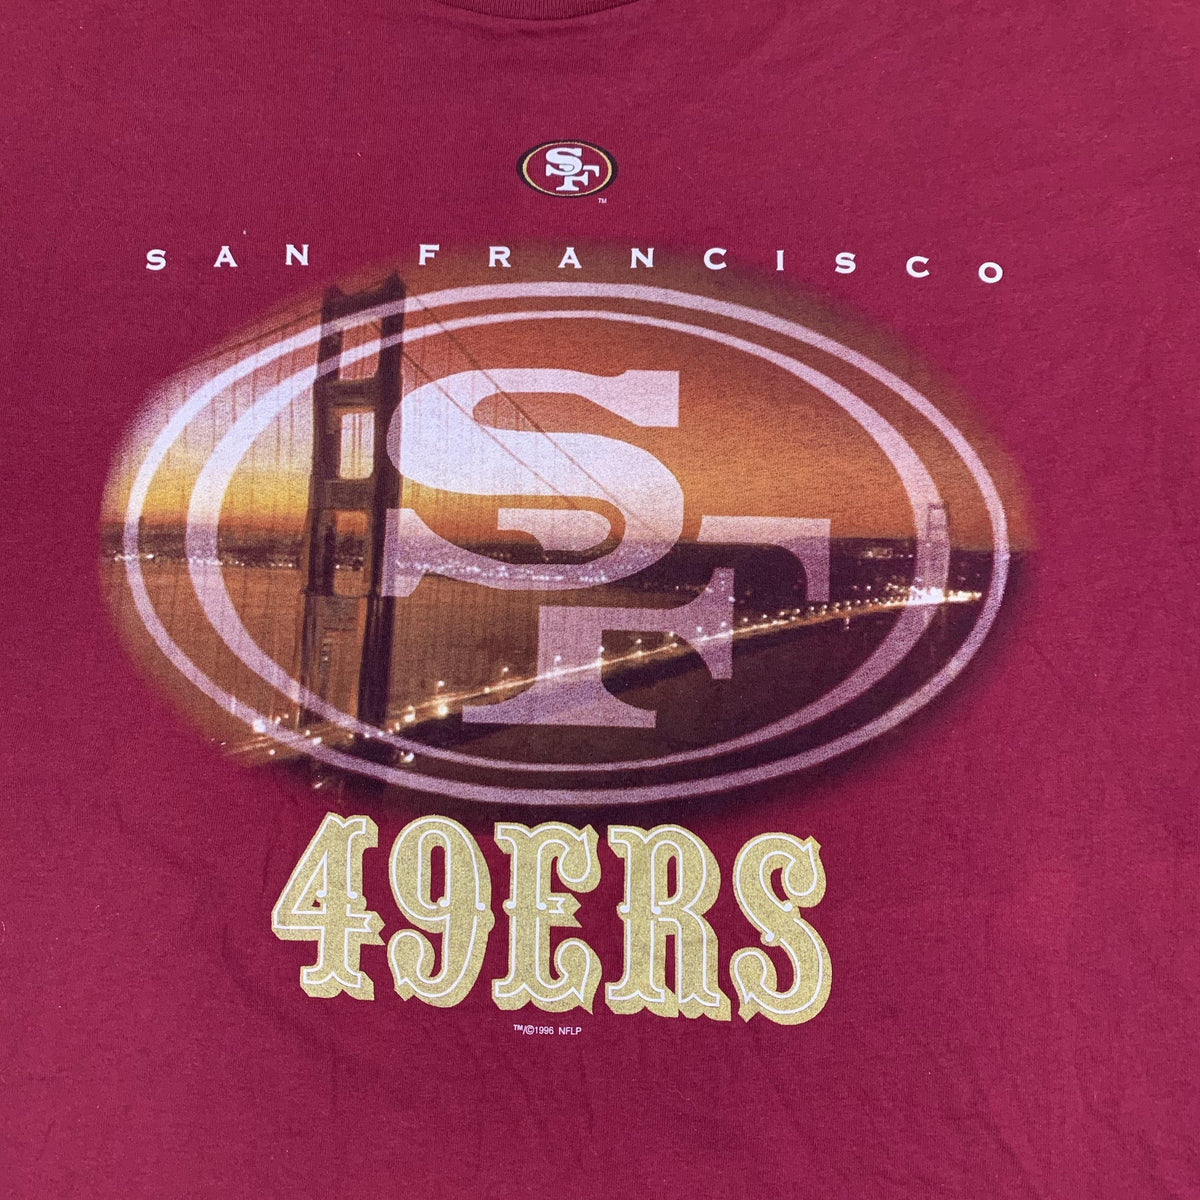 Vintage Reebok San Francisco &quot;49ers&quot; T-Shirt - jointcustodydc